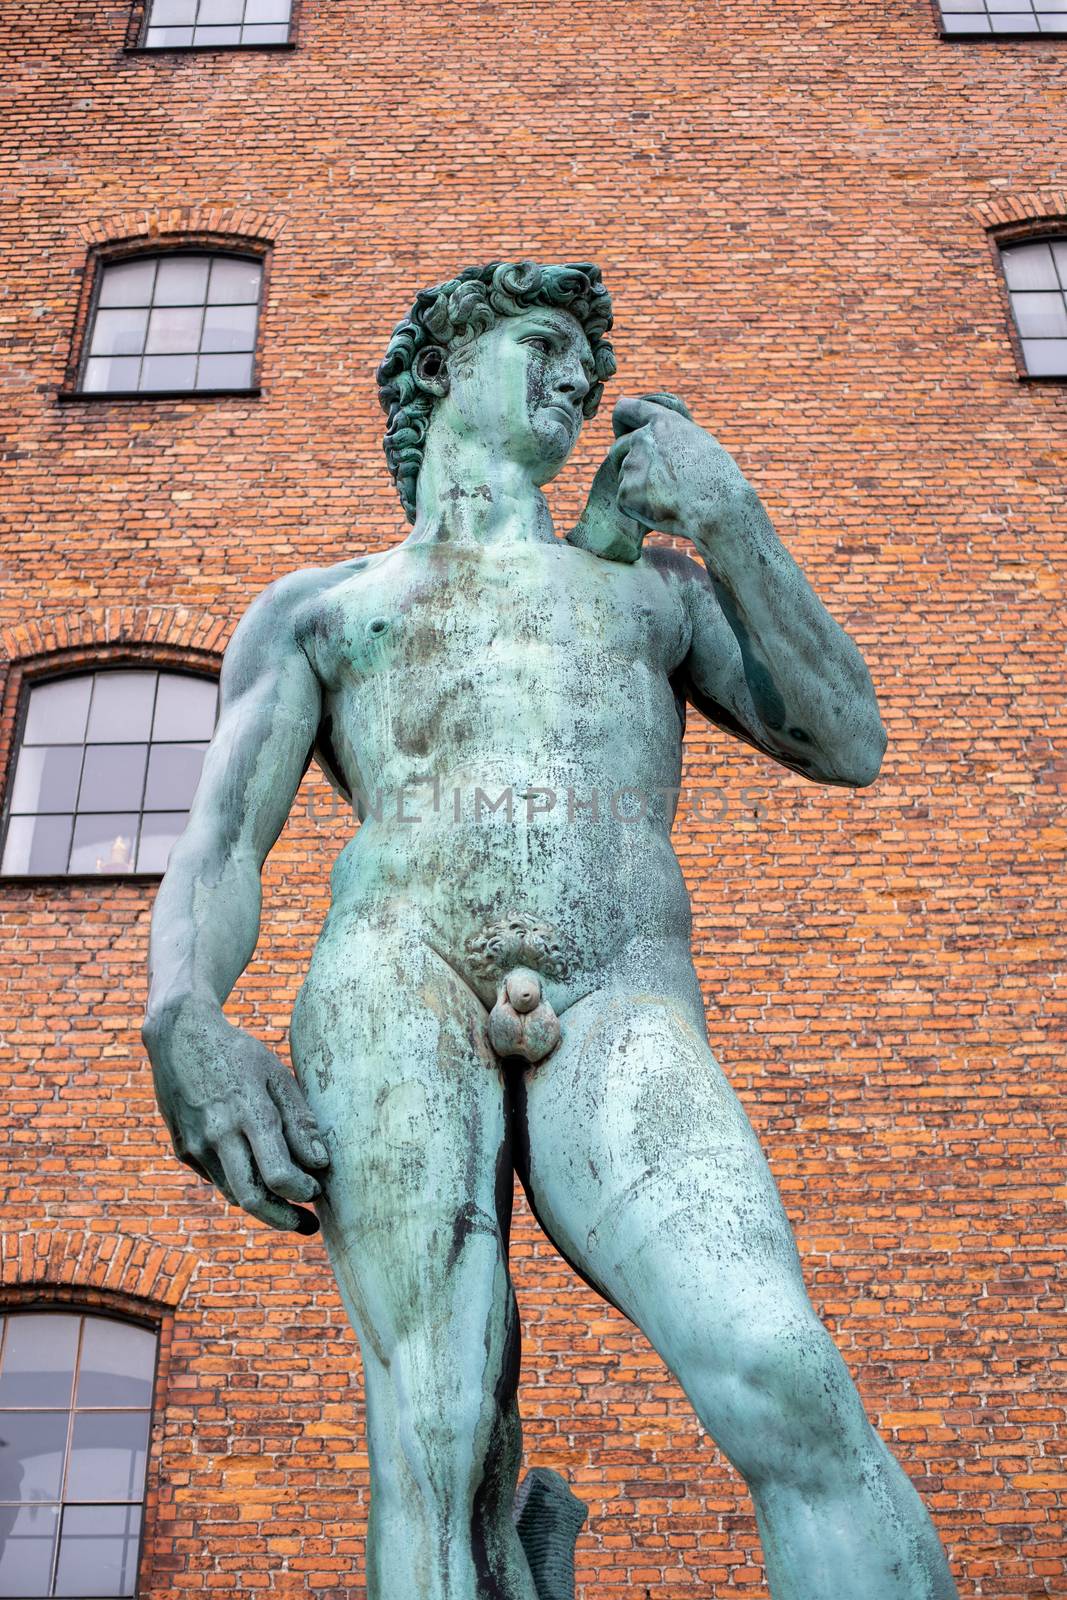 Copenhagen, Denmark - February 7, 2020: Replica of Michelangelo's David statue outside The Royal Cast Collection building on Langelinie Promenade.